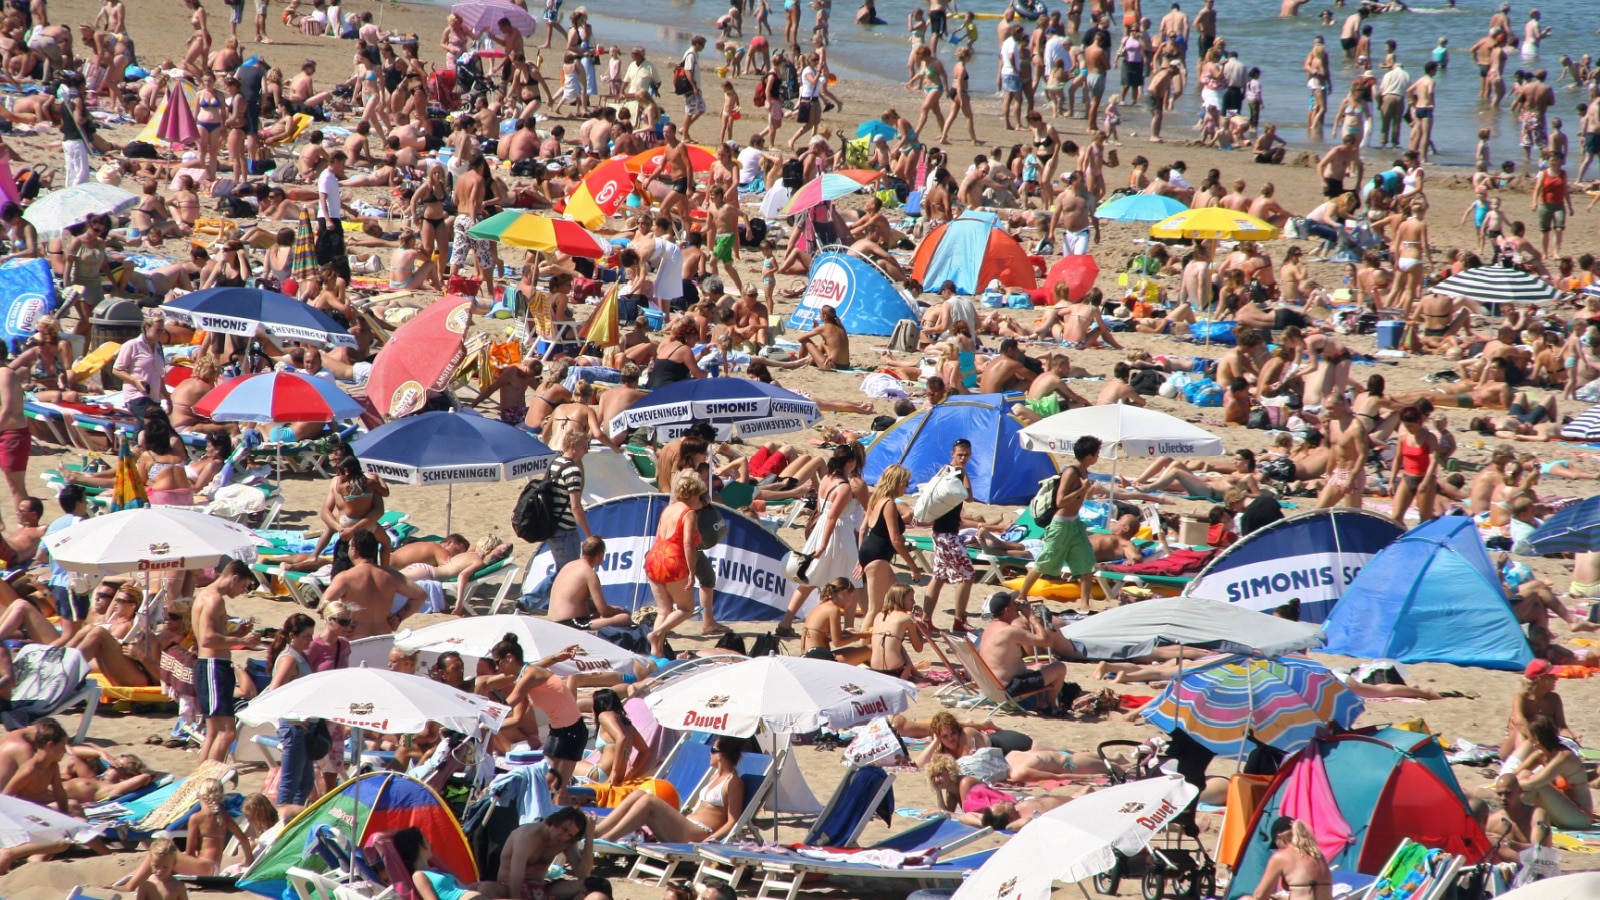 Crowded beach in summer